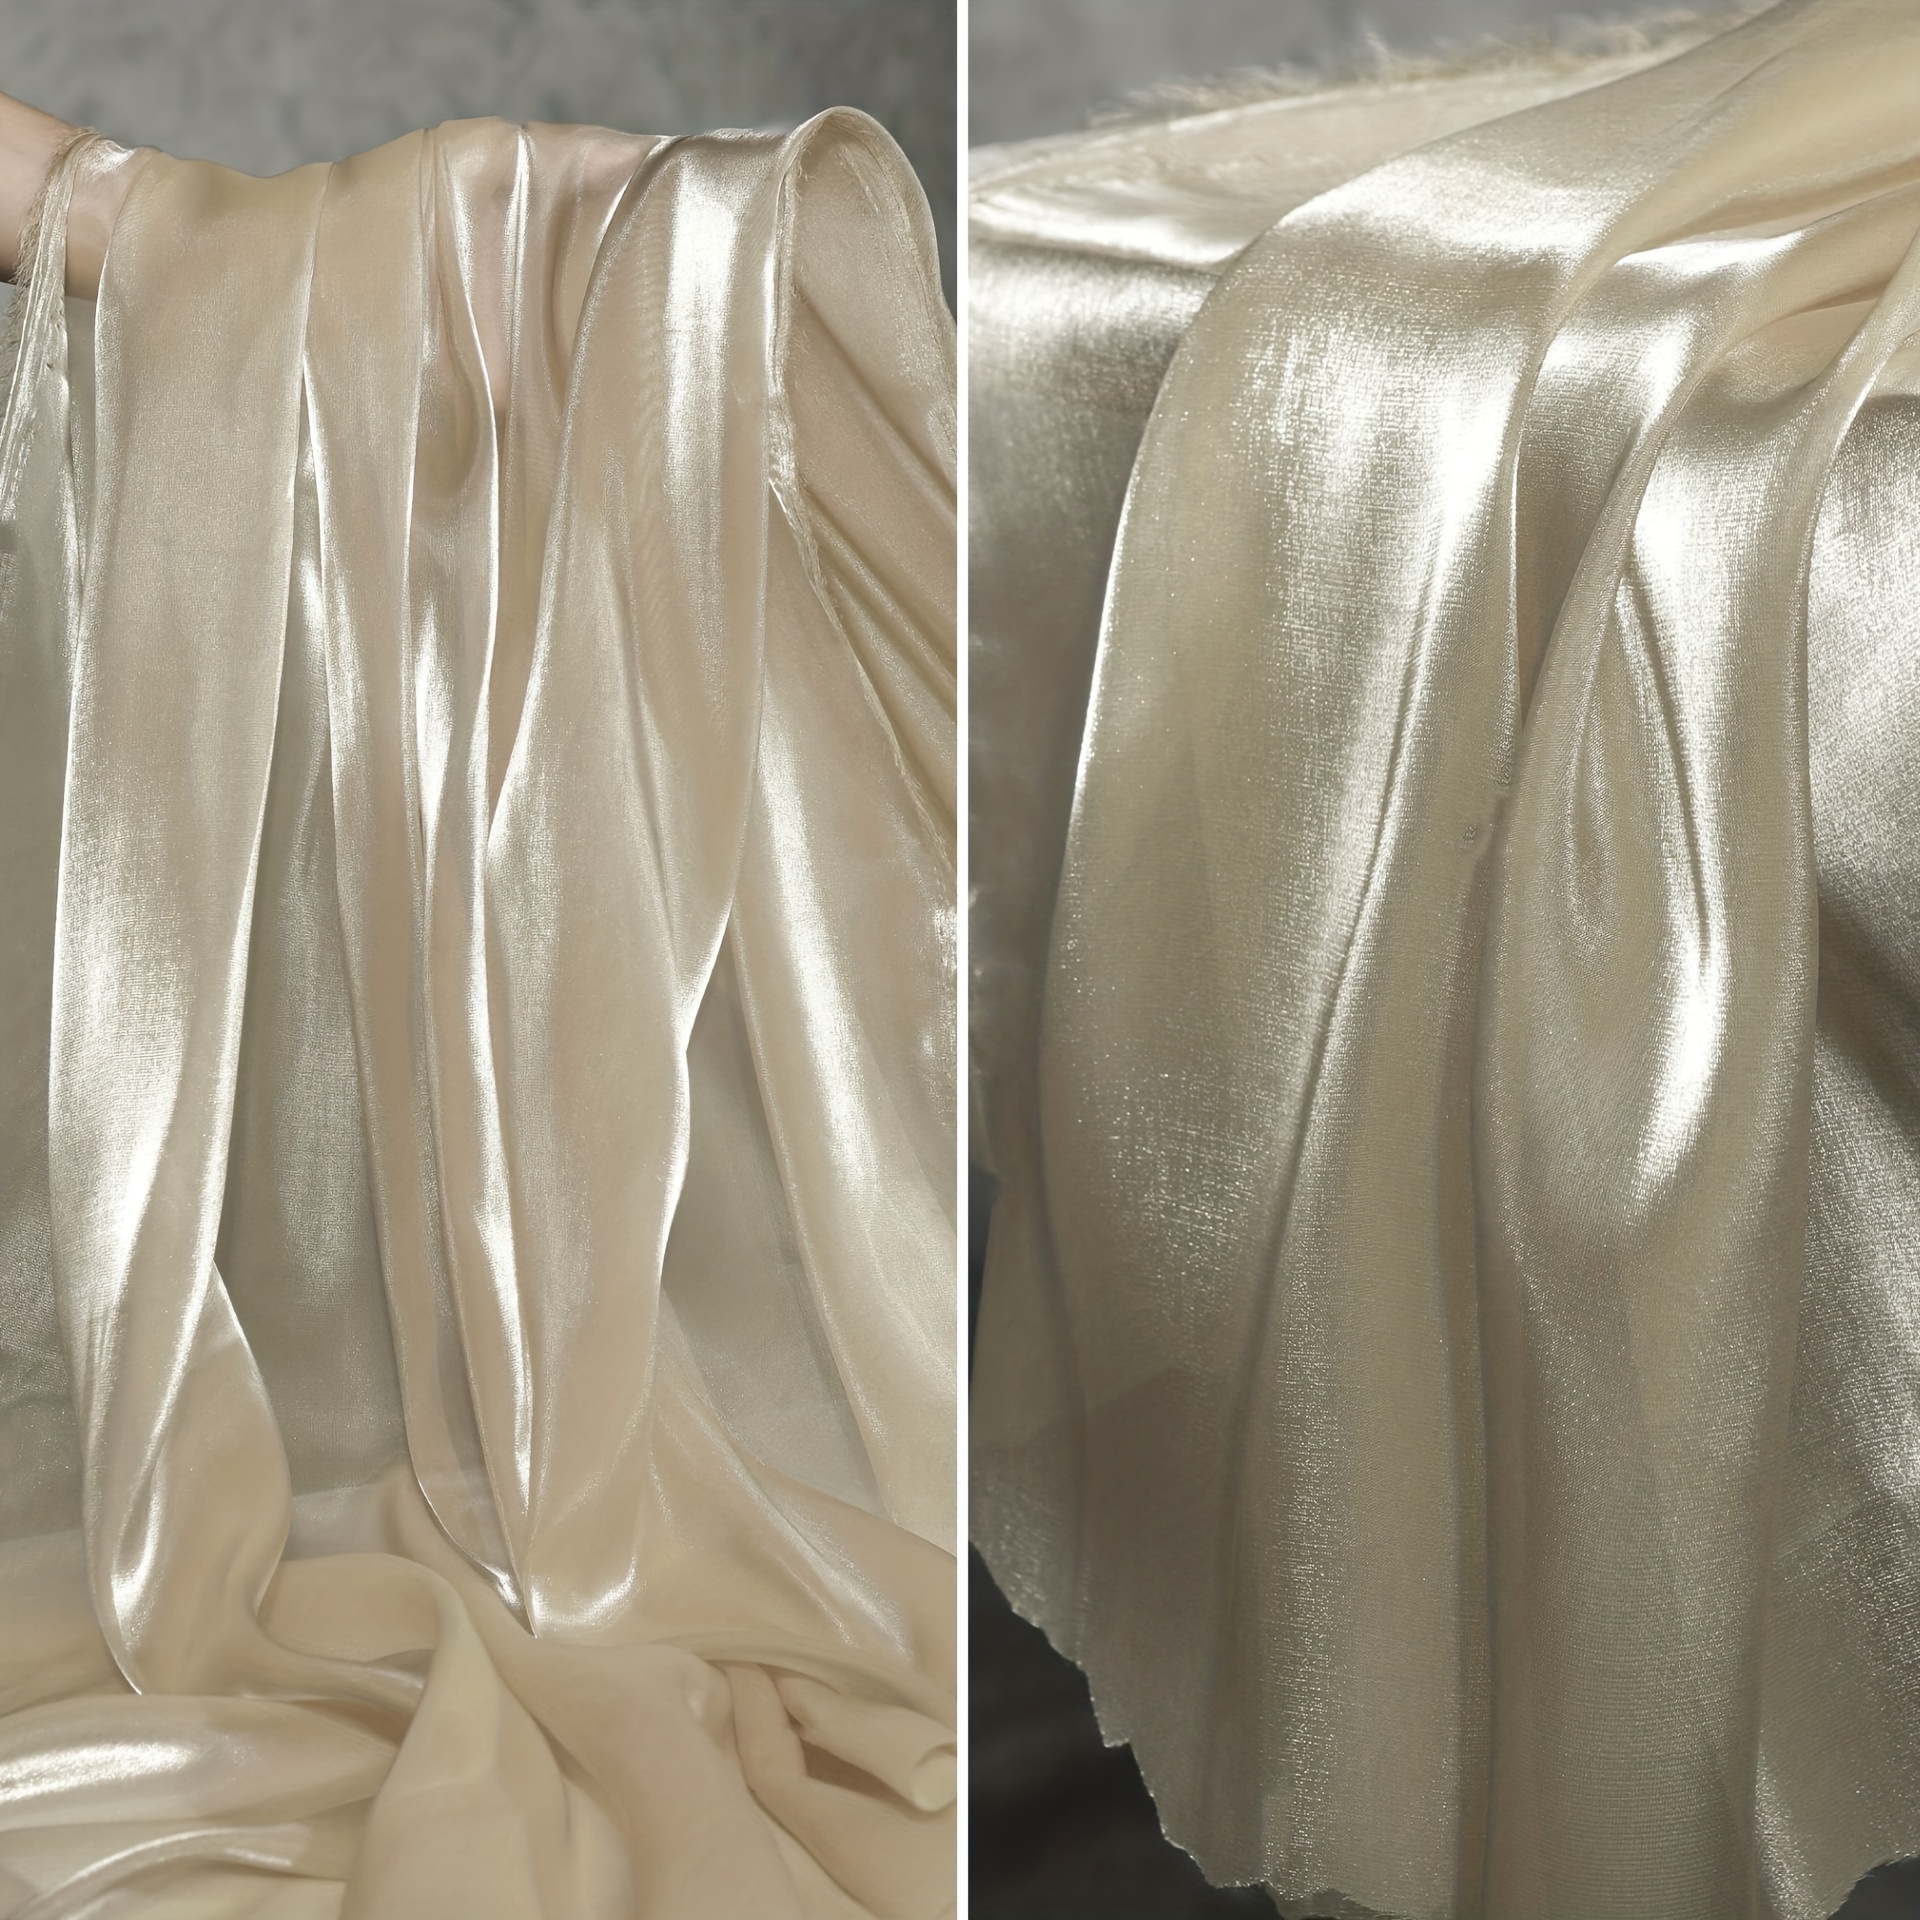 Solid Color Glitter Encryption Mesh Translucent Ice Silk Satin Hard Yarn  Clothing Wedding Decoration Fabric Per Yard TJ7149